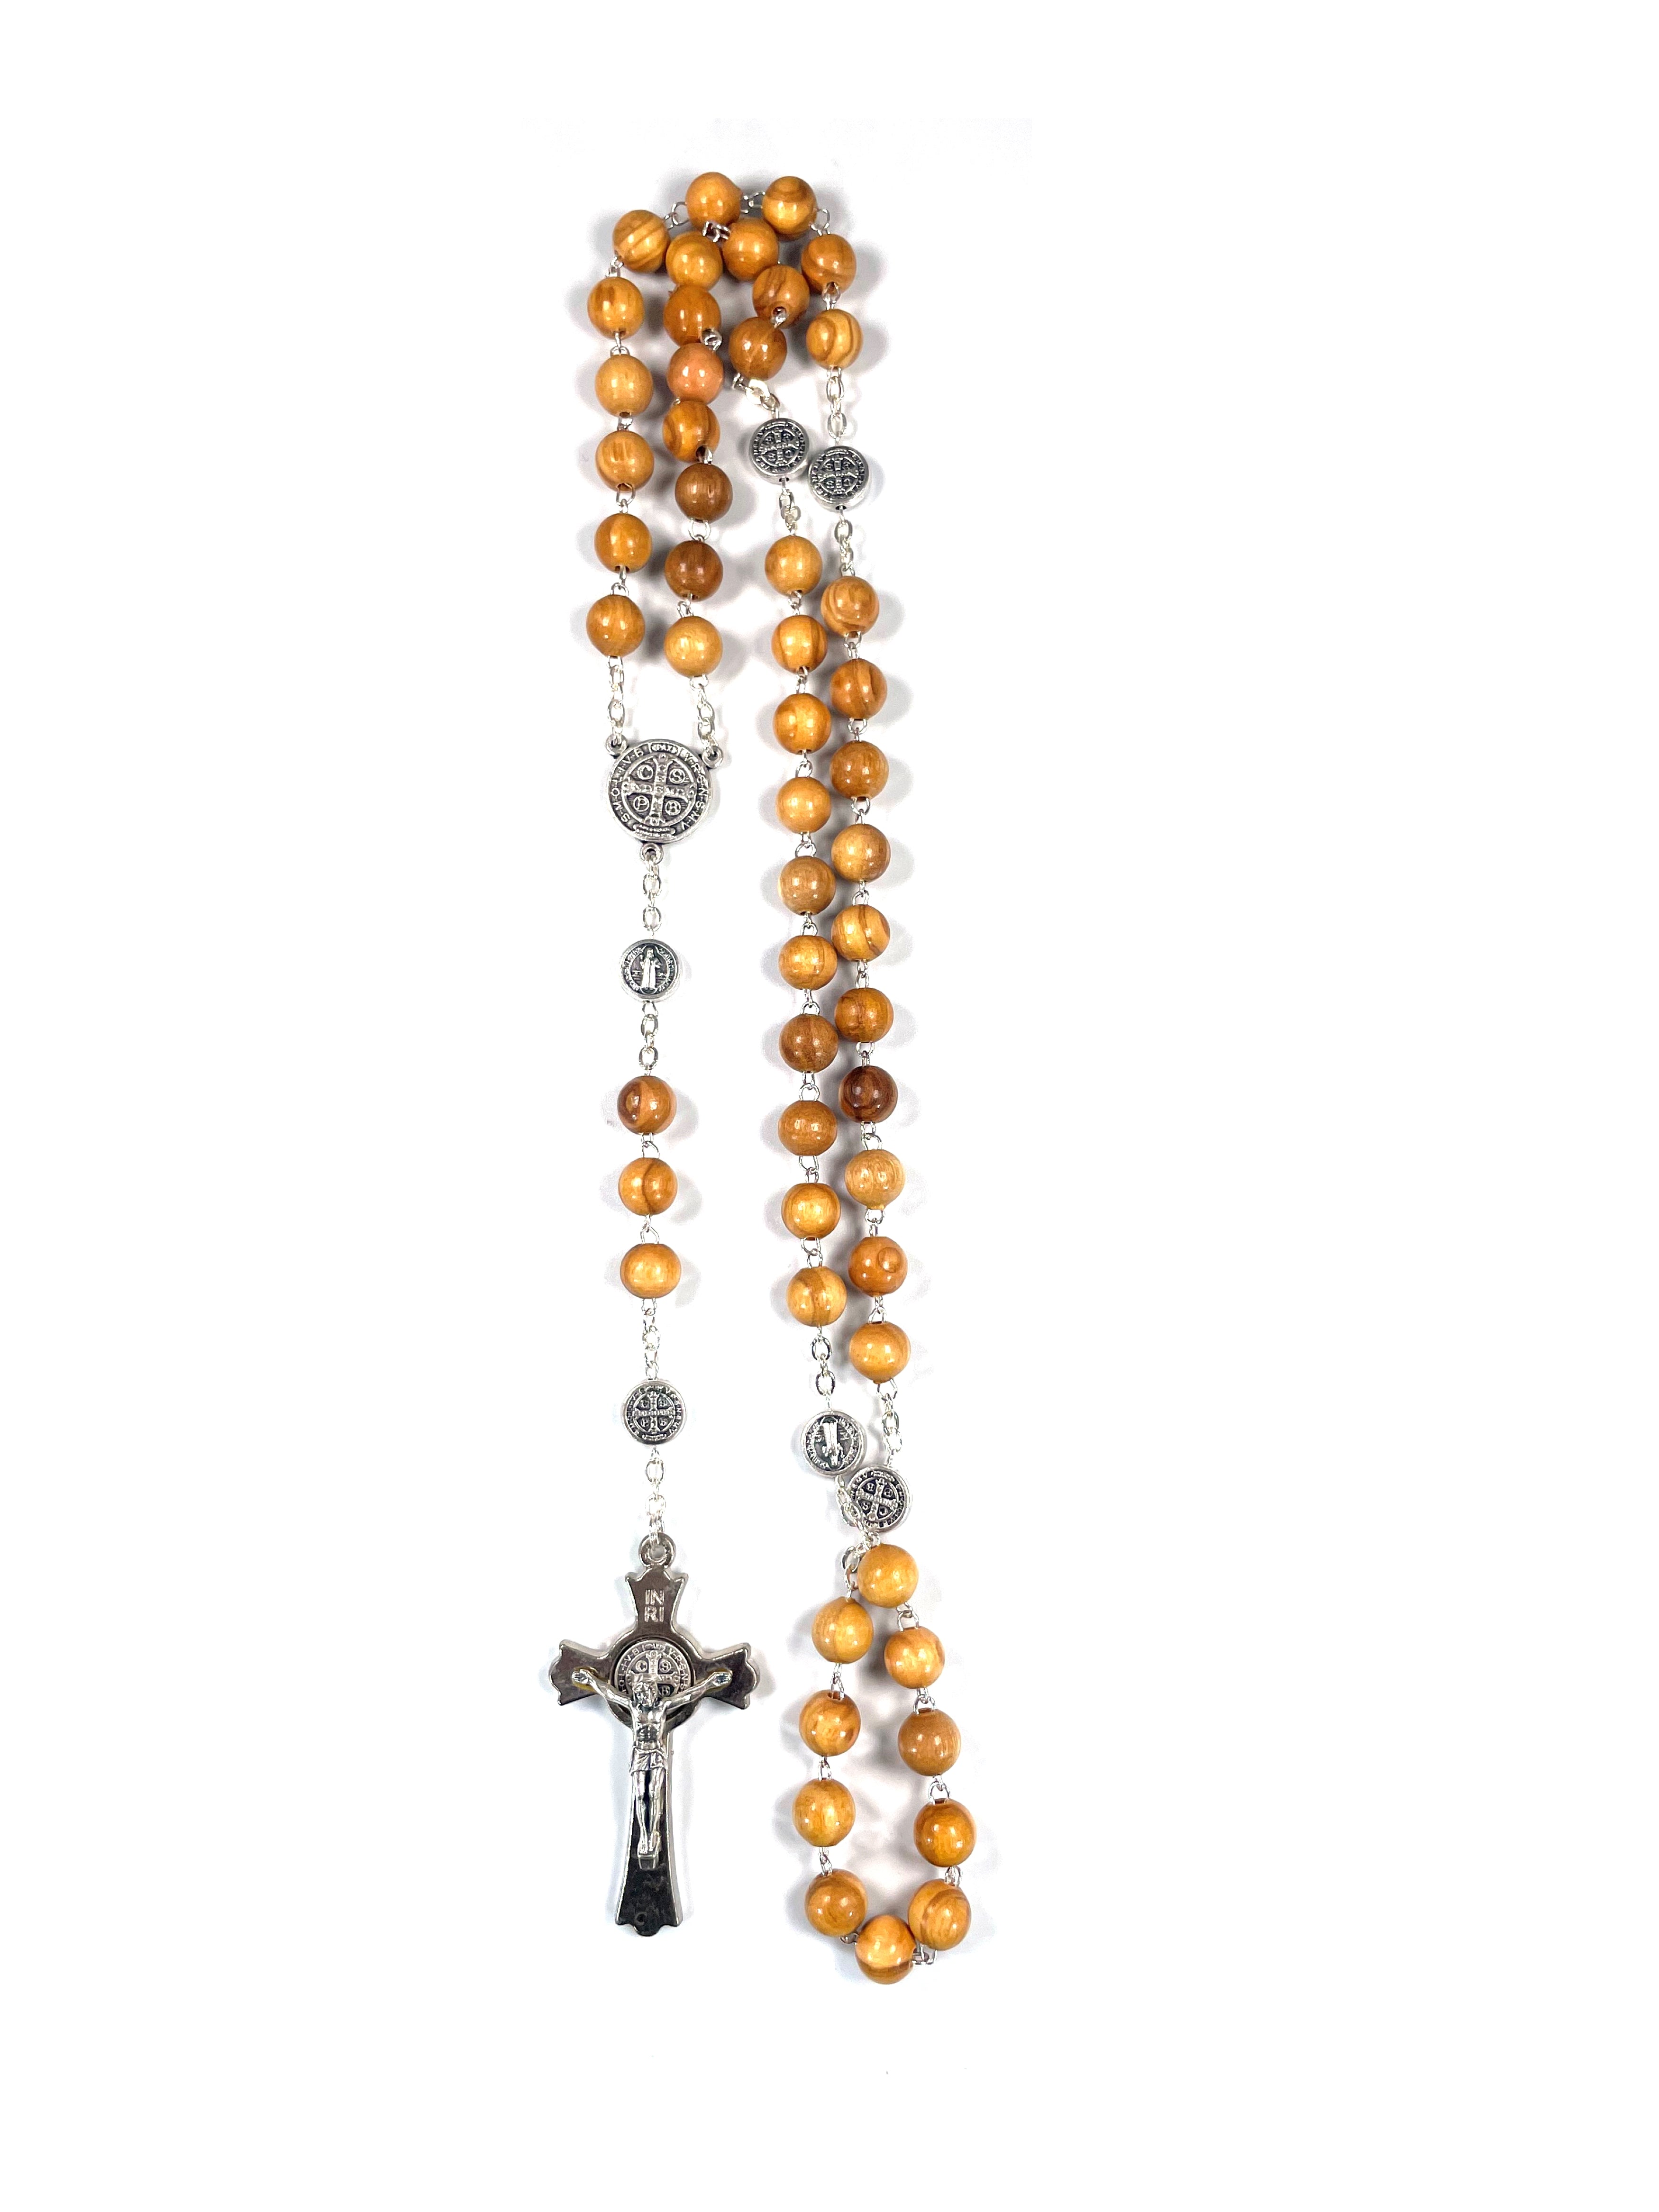 Saint Benedict Italian wooden rosary